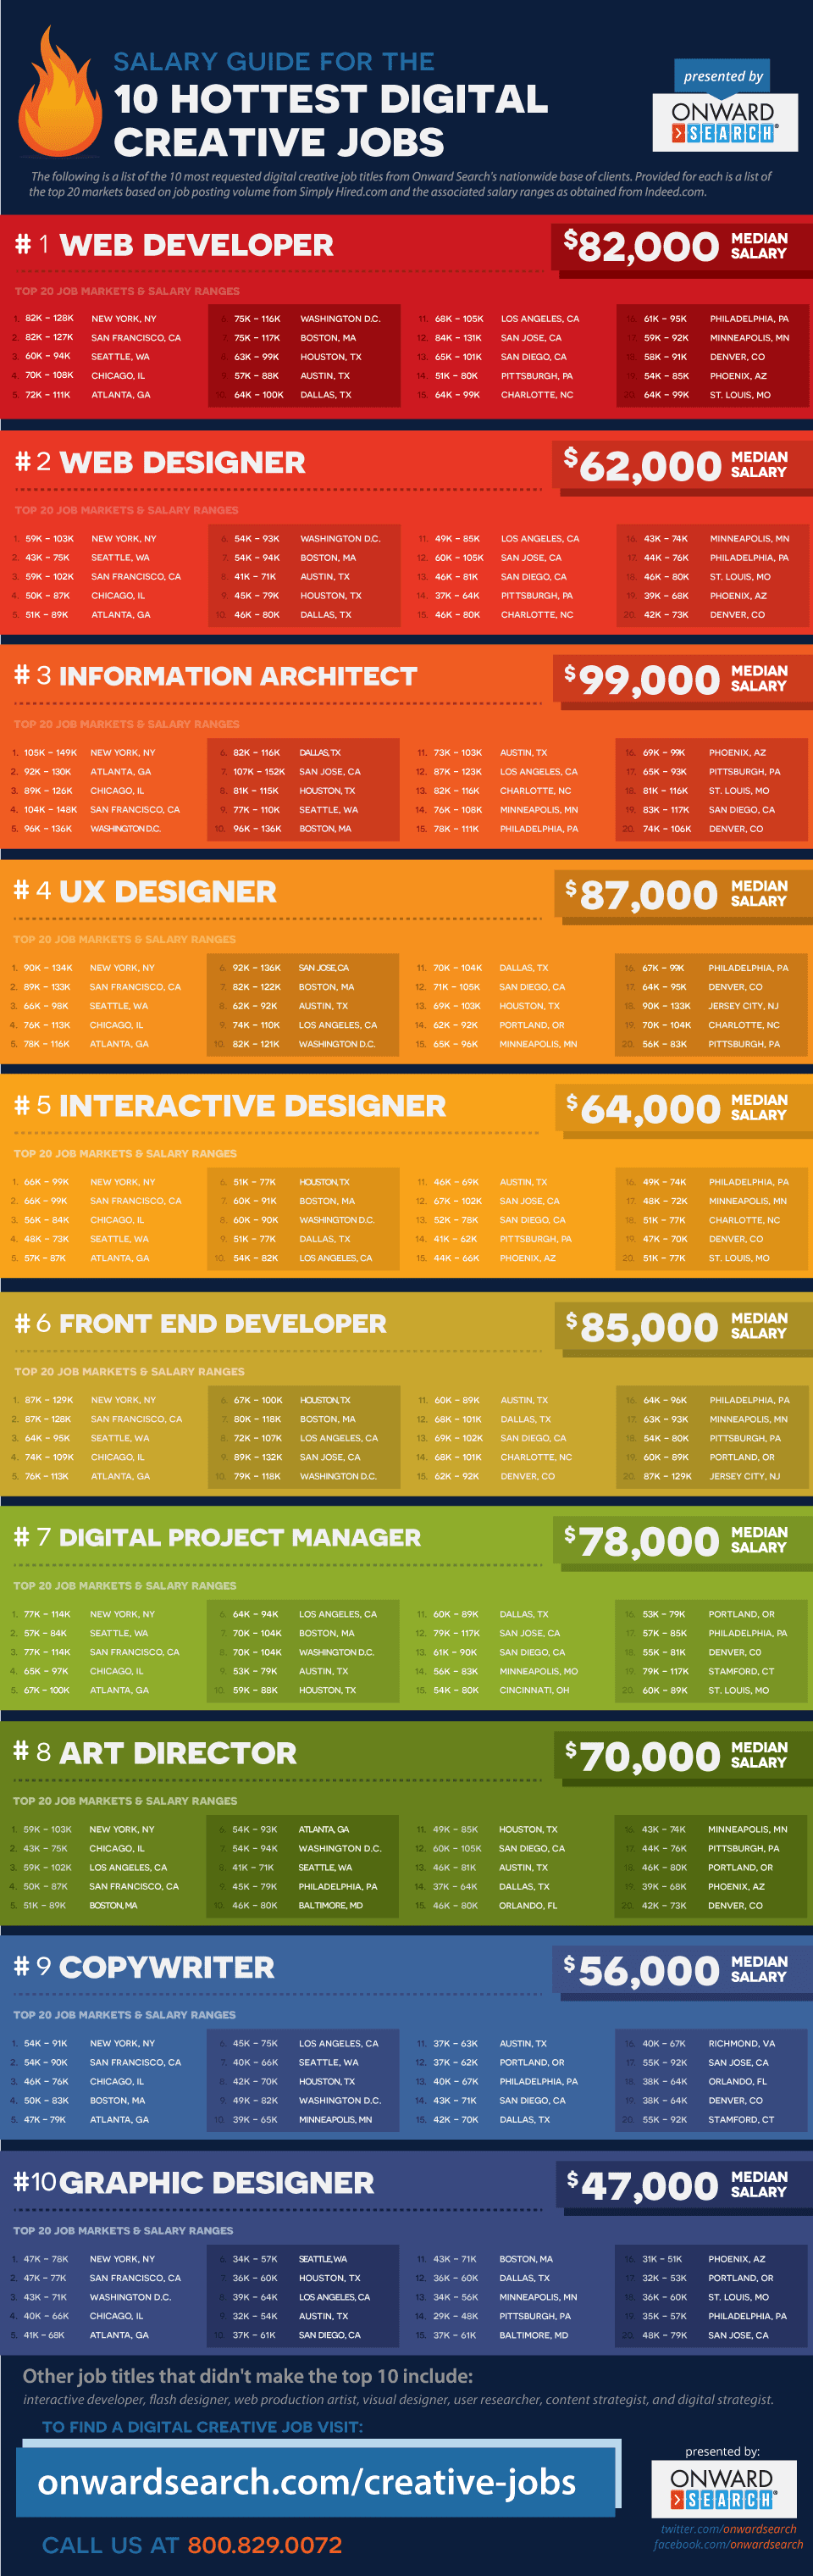 Digital Creative Jobs and Salaries Guide